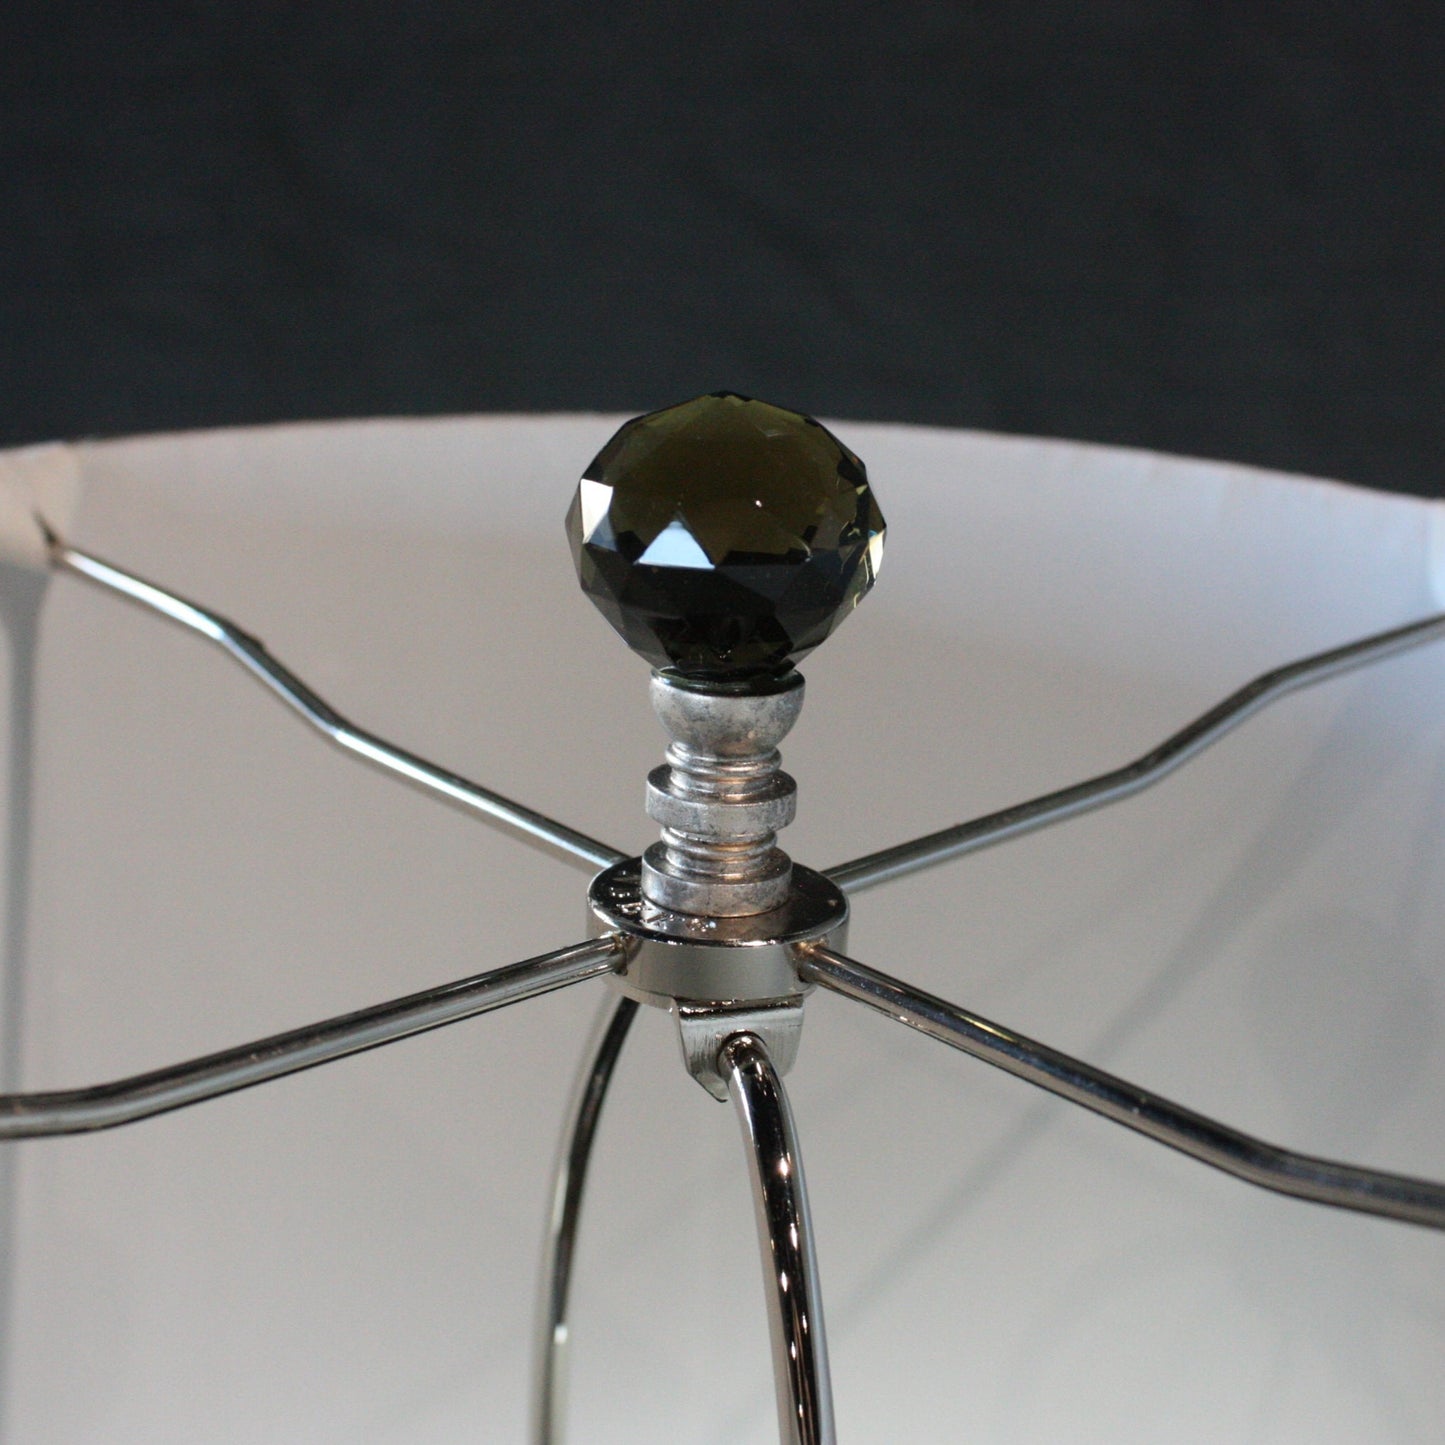 Schonbek Crystal Lamp